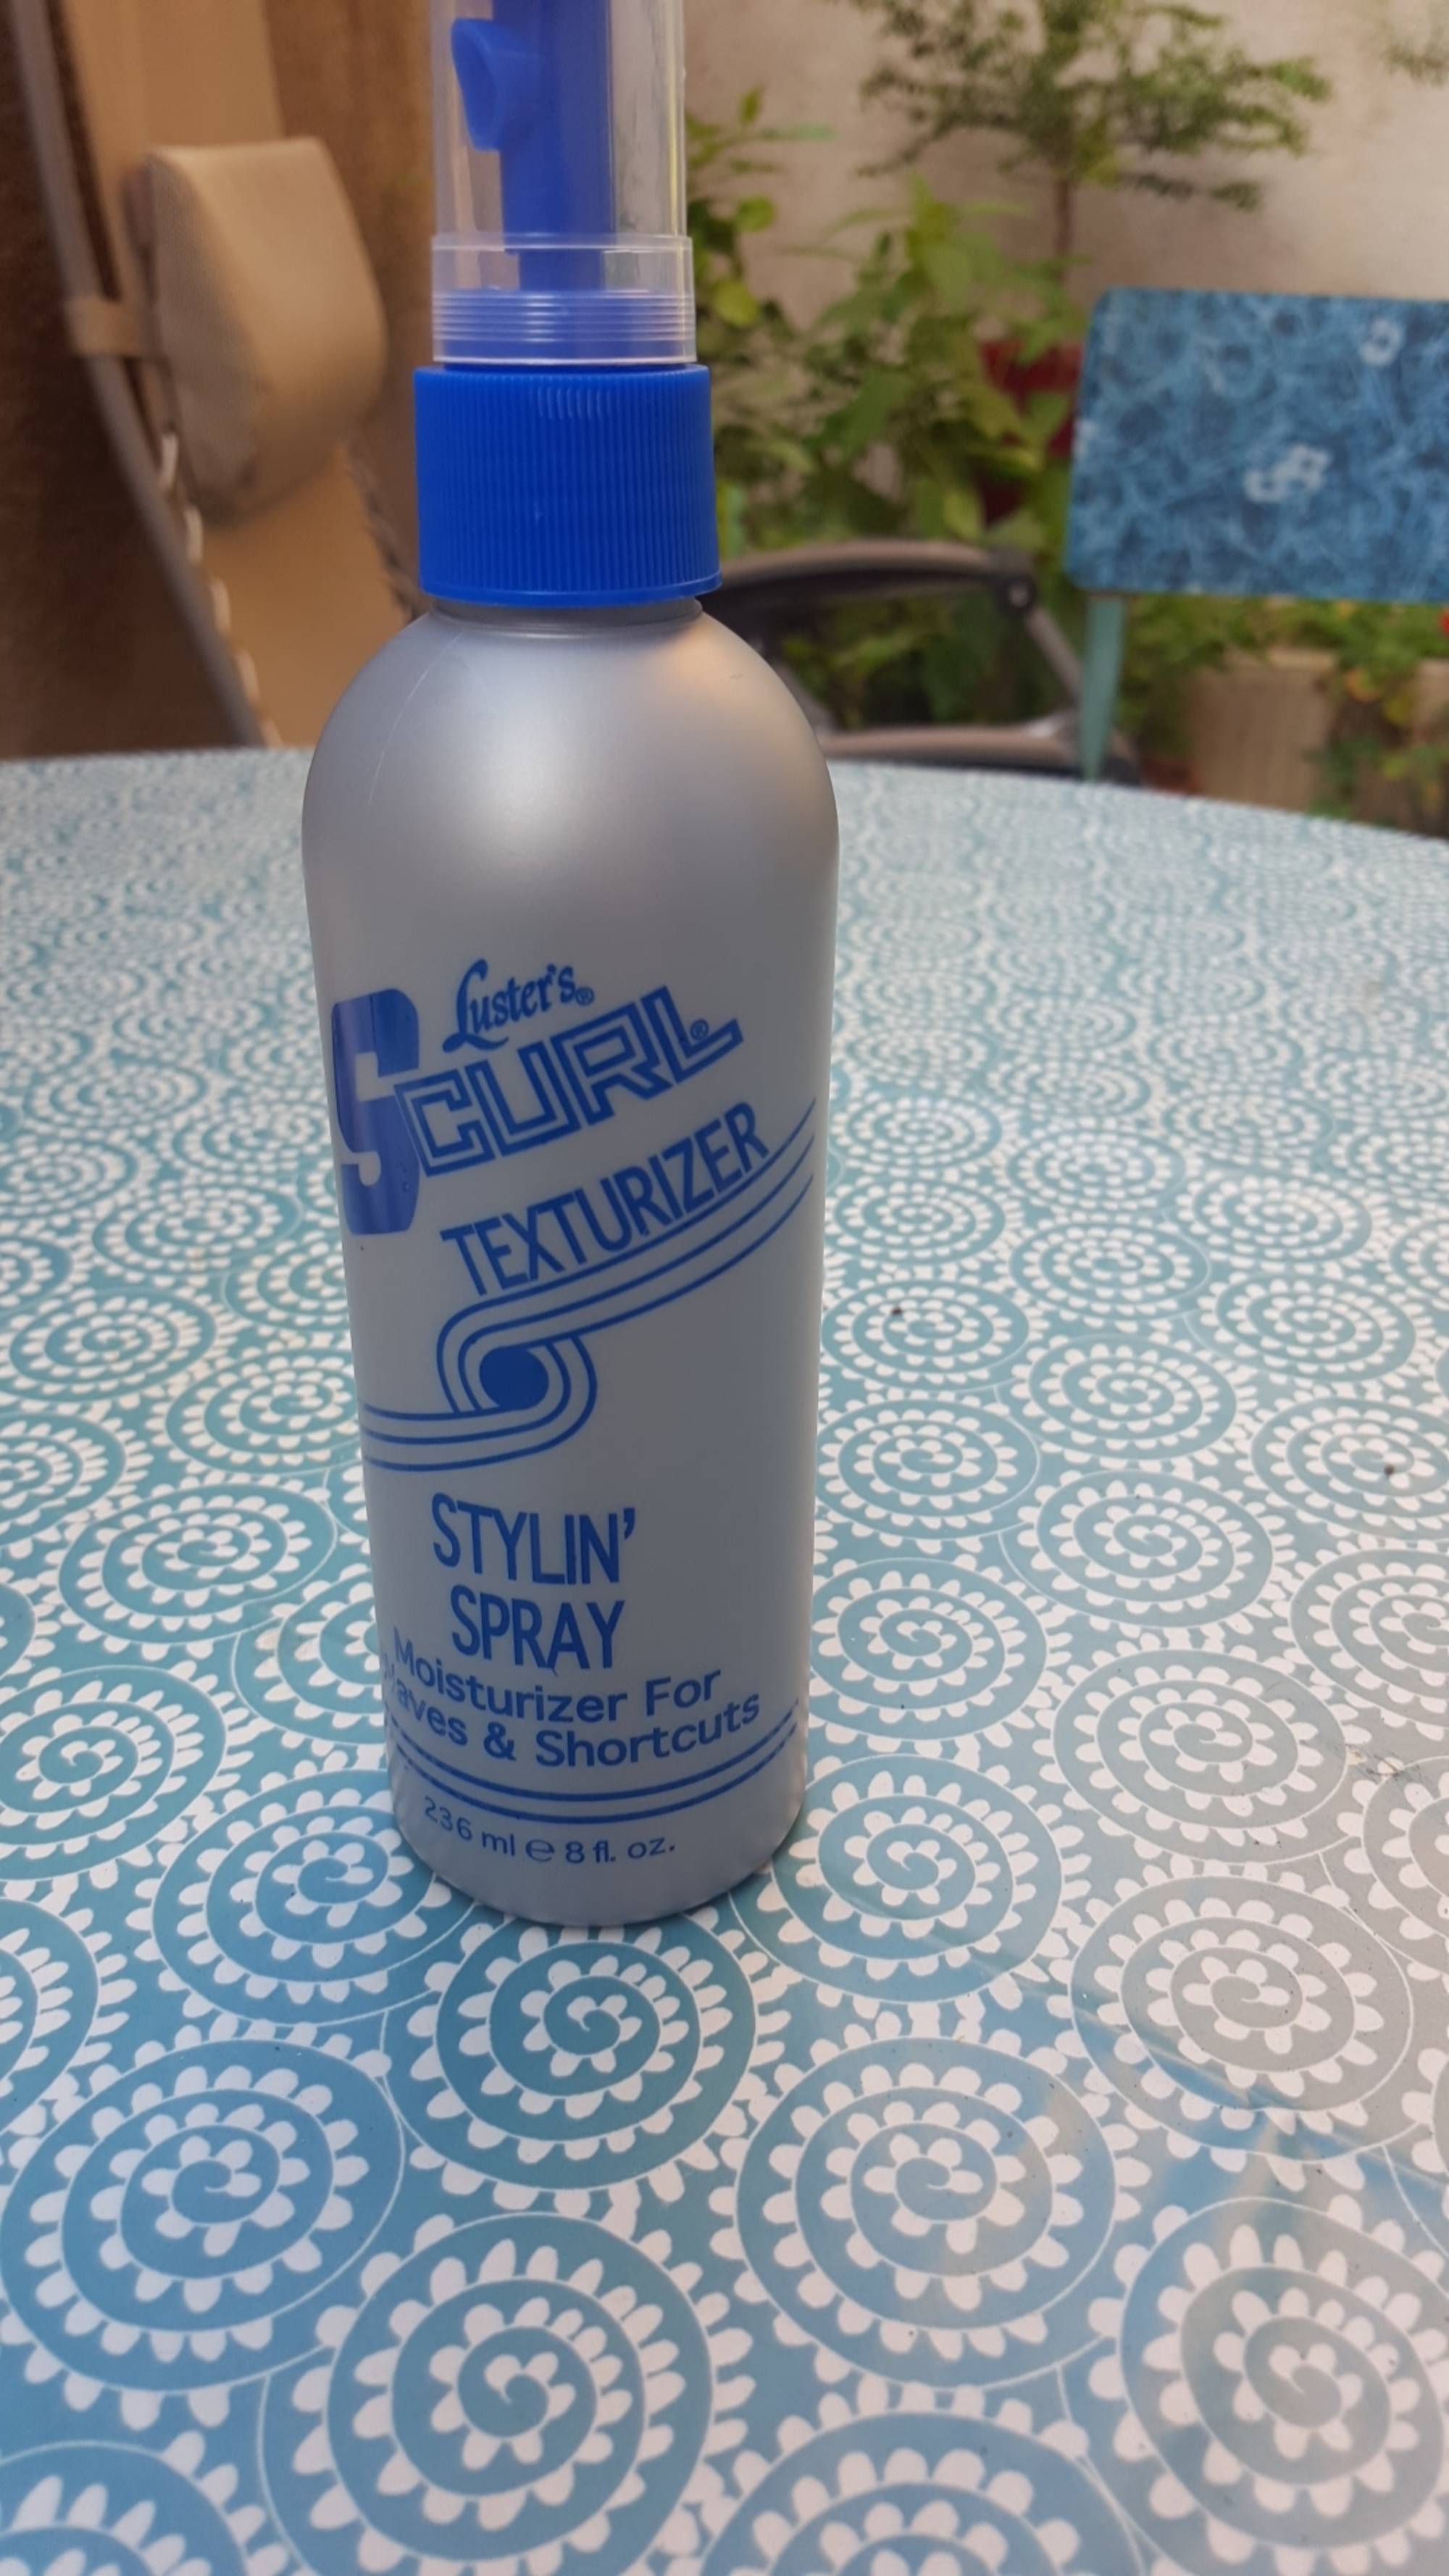 LUSTER'S - Scurl texturizer - Stylin' spray